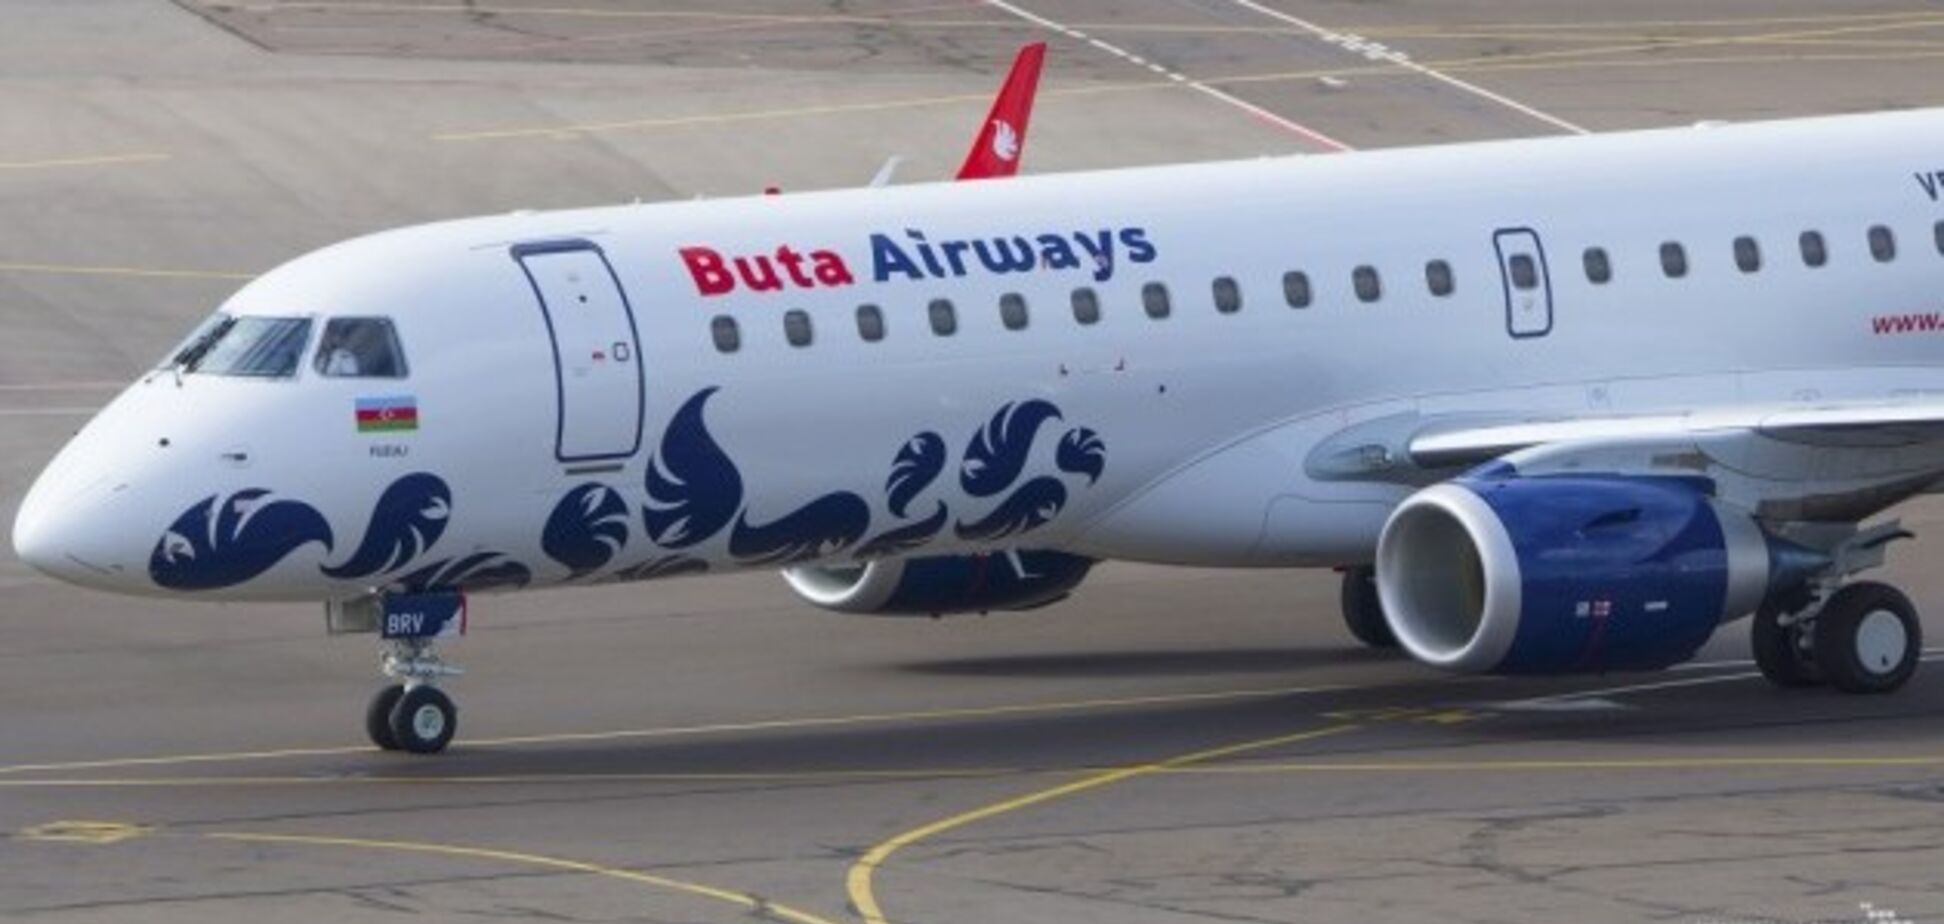 Buta Airways 